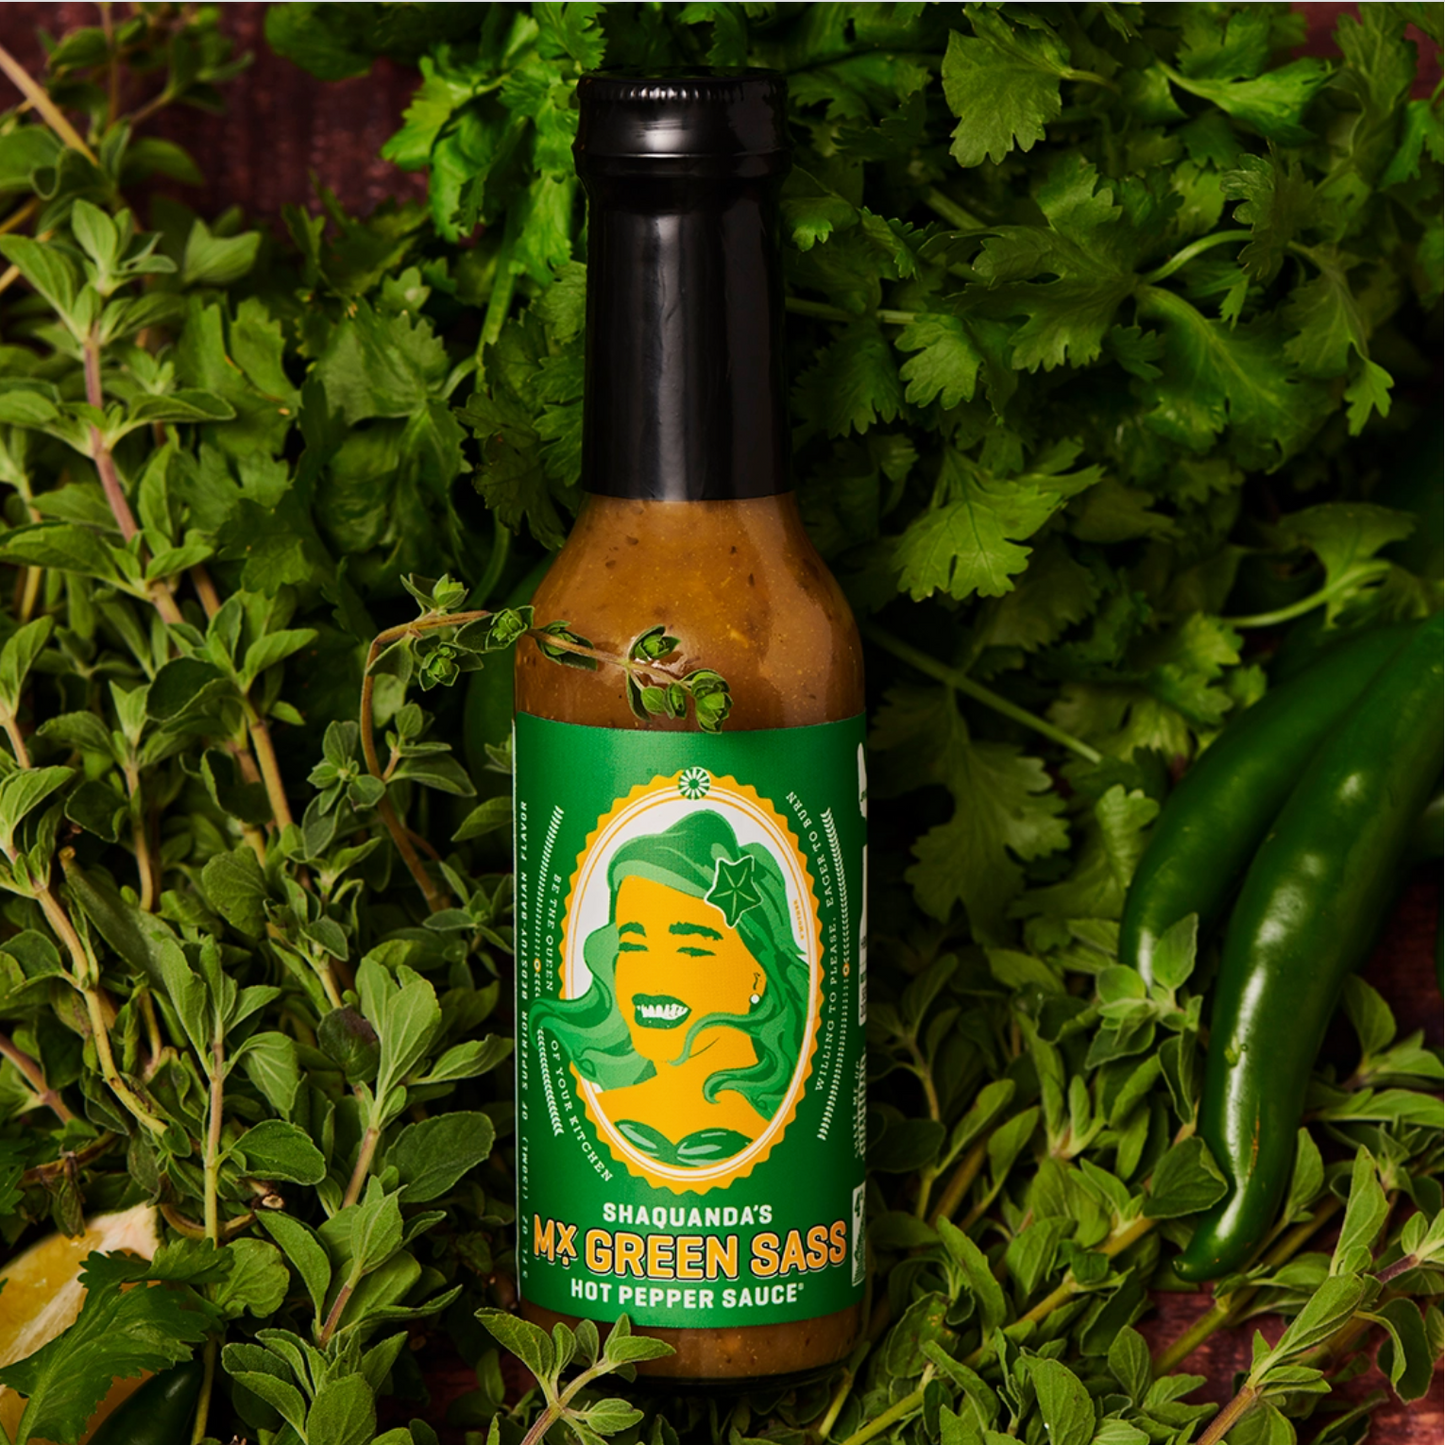 Mx. Green Sass Sauce by Shaquanda's